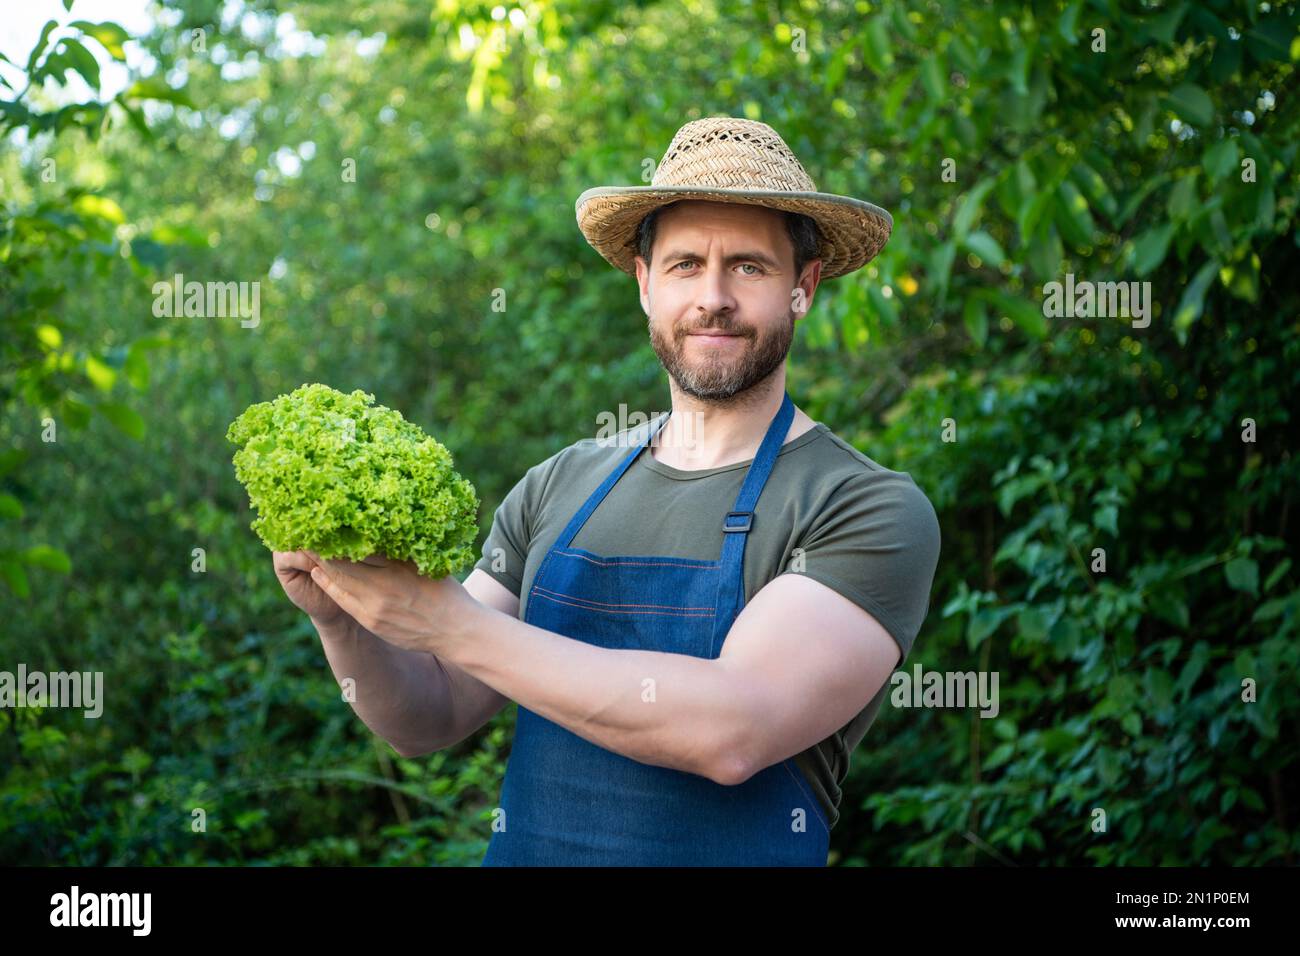 man gardener in straw hat with lettuce leaves Stock Photo